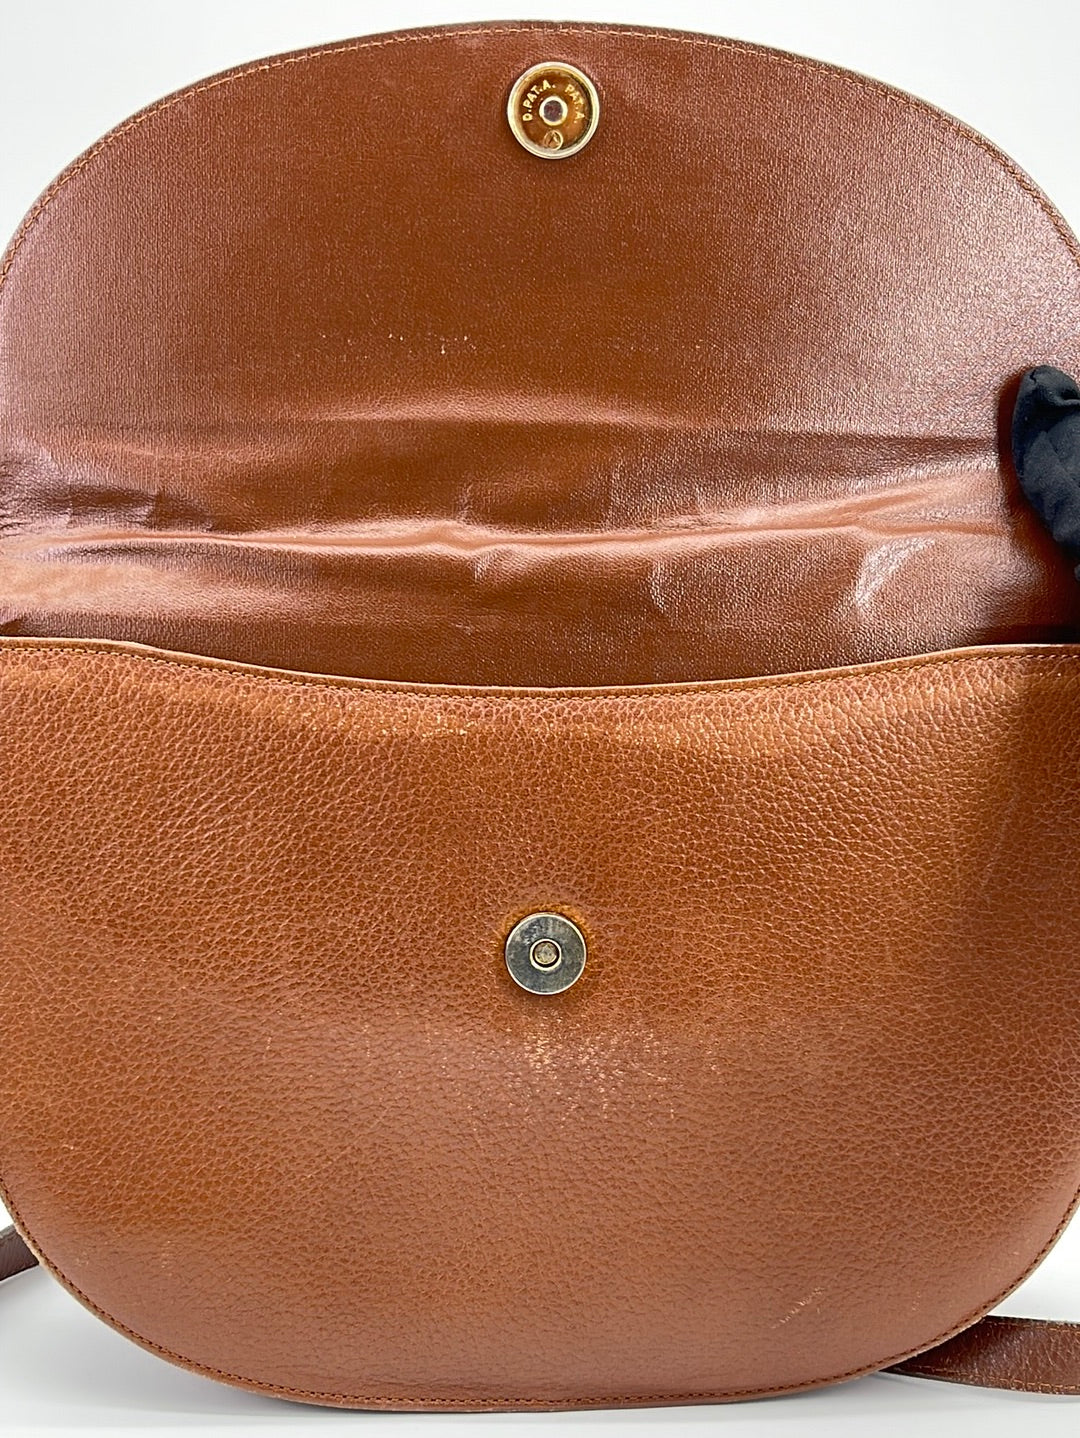 Burberry - The Saddle Clutch Leather Crossbody Black